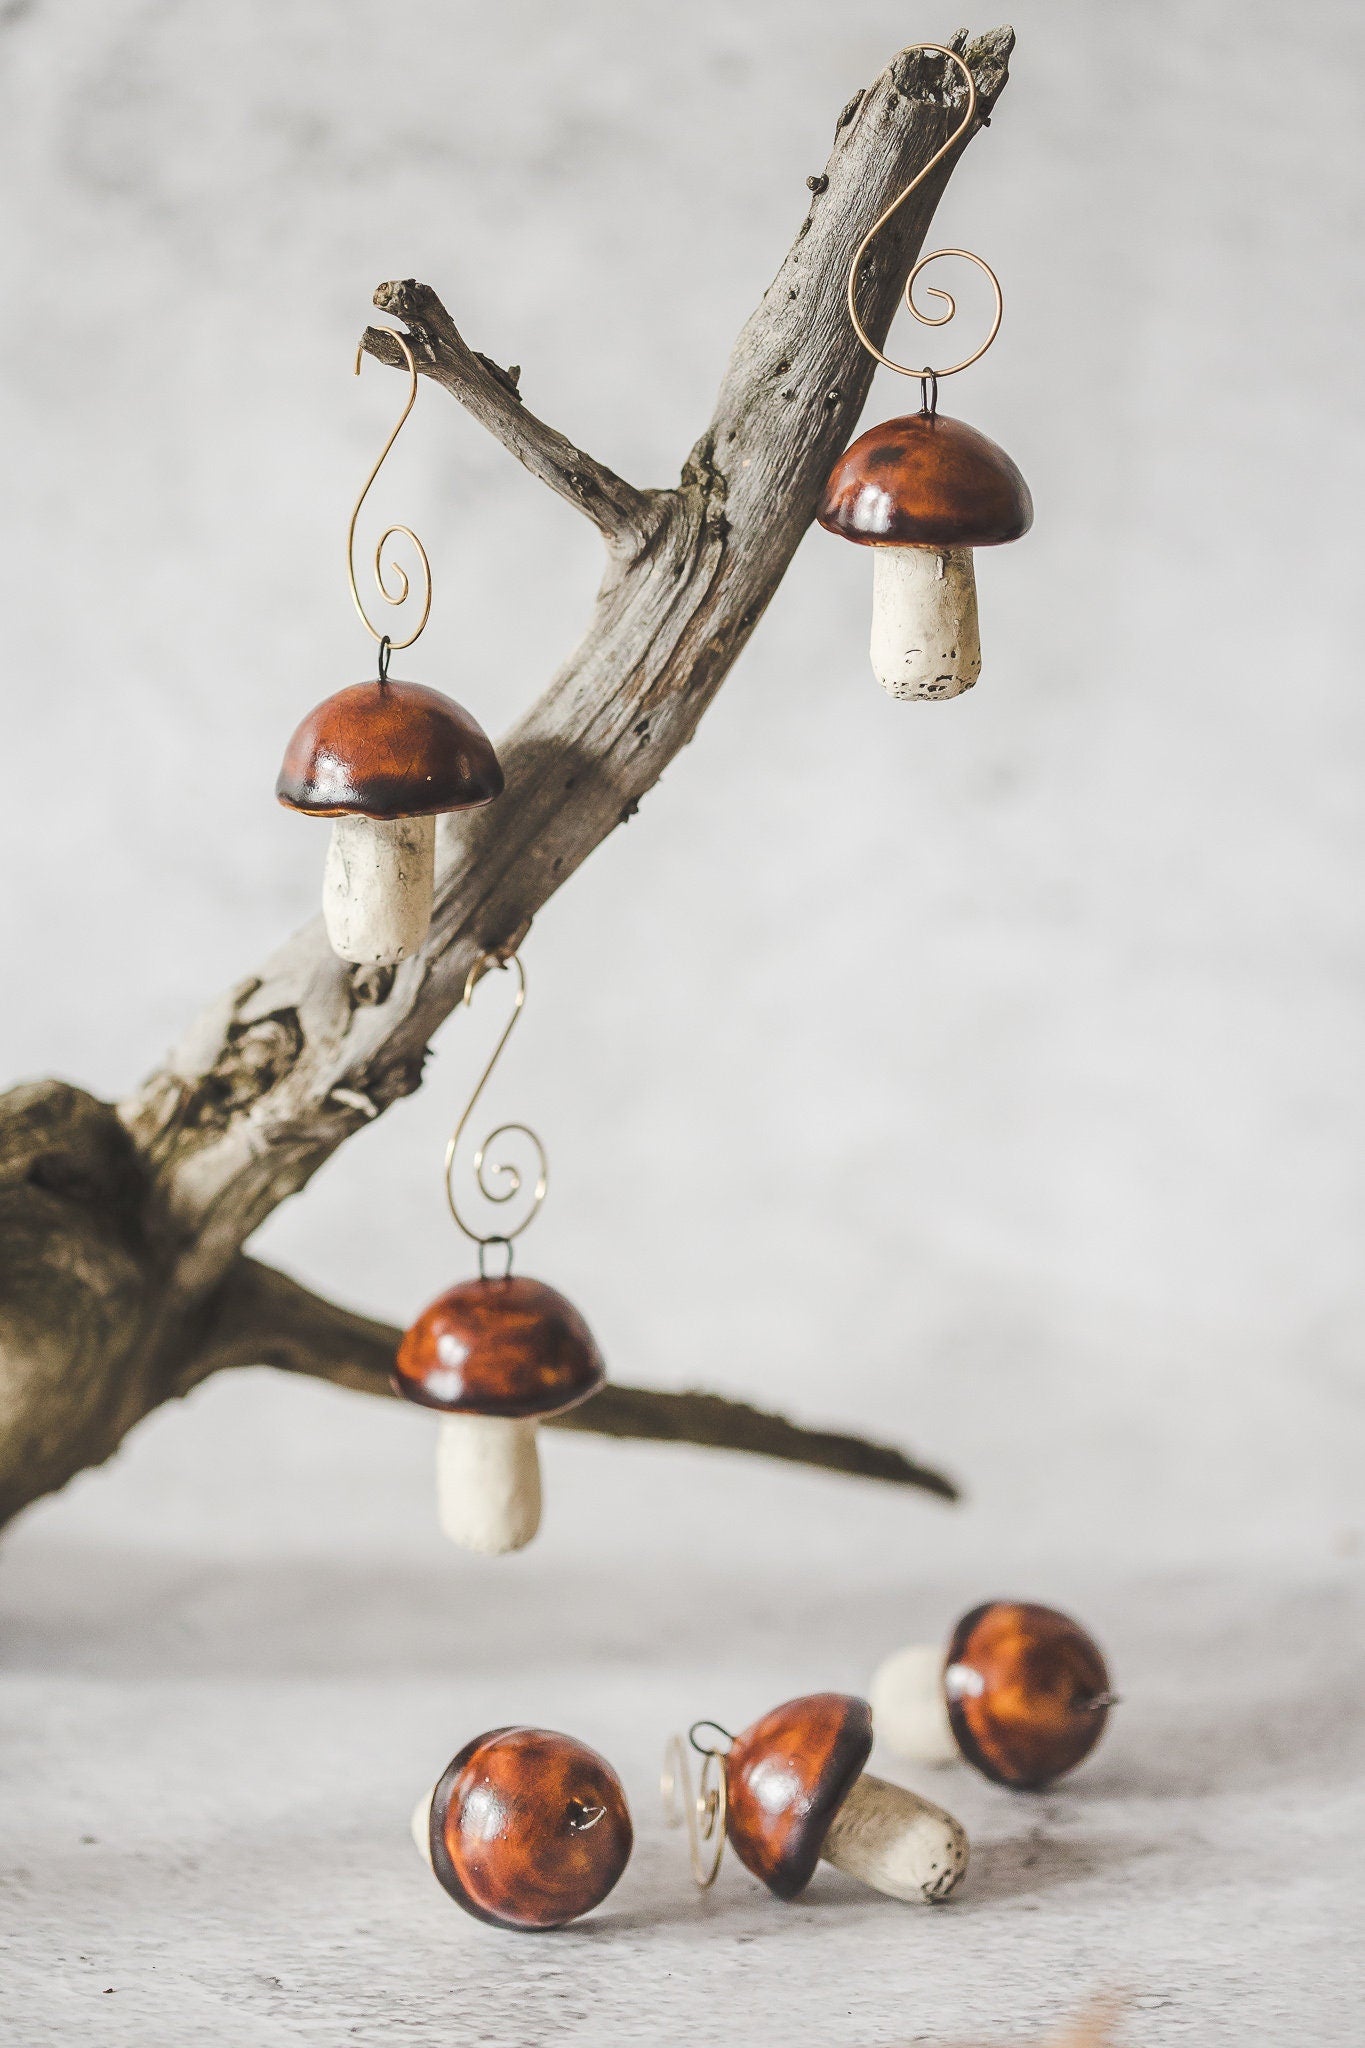 Vintage Christmas ornament set of six boletus mushrooms - Penny bun pottery fungi Christmas decorations - Porcini Christmas mushrooms gift